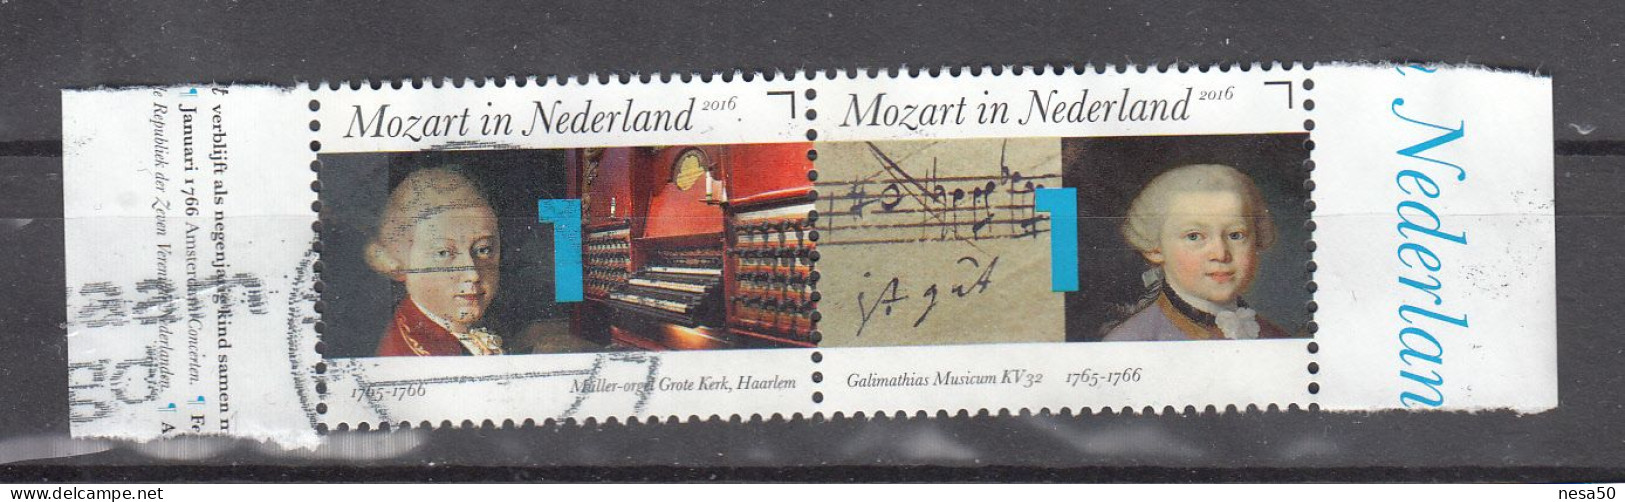 Nederland 2016 Nvph Nr 3414 + 3415;  Mi Nr 3471 + 3472 Mozart In Nederland 1765 - 1766, Muziek 2x - Gebruikt